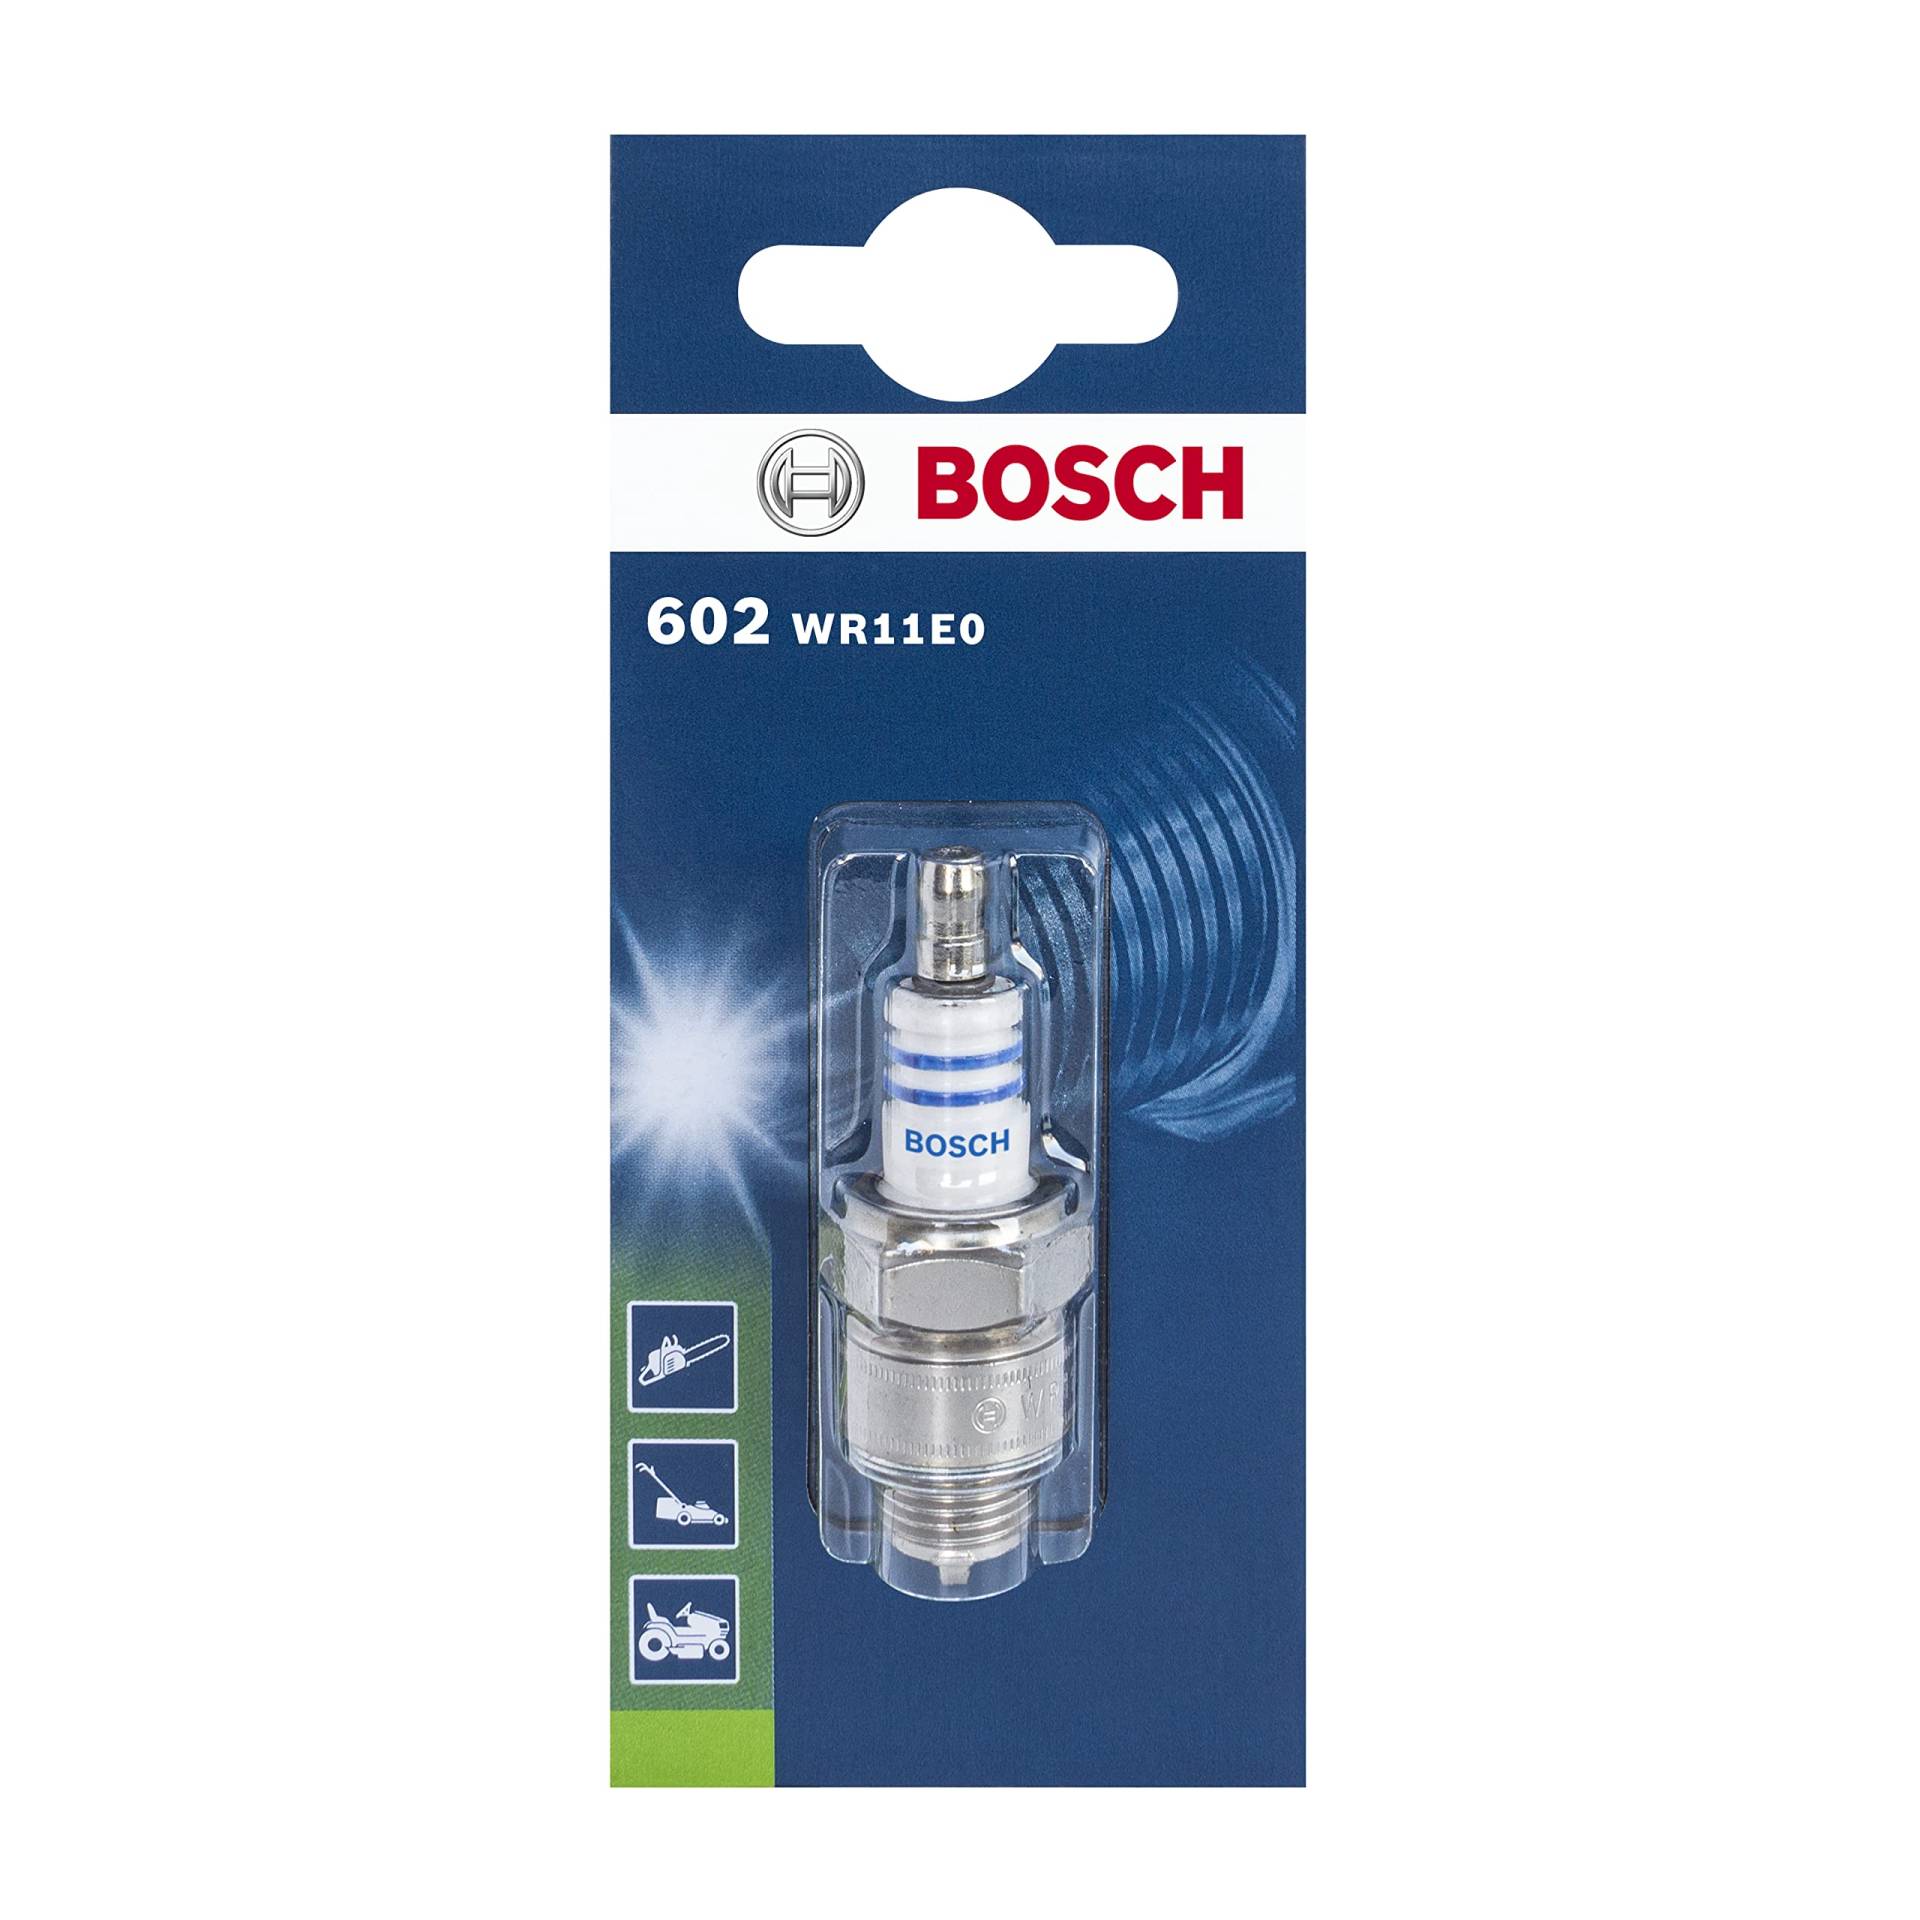 Bosch WR11E0 (602) - Zündkerze für Gartengeräte - 1 Stück von Bosch Automotive